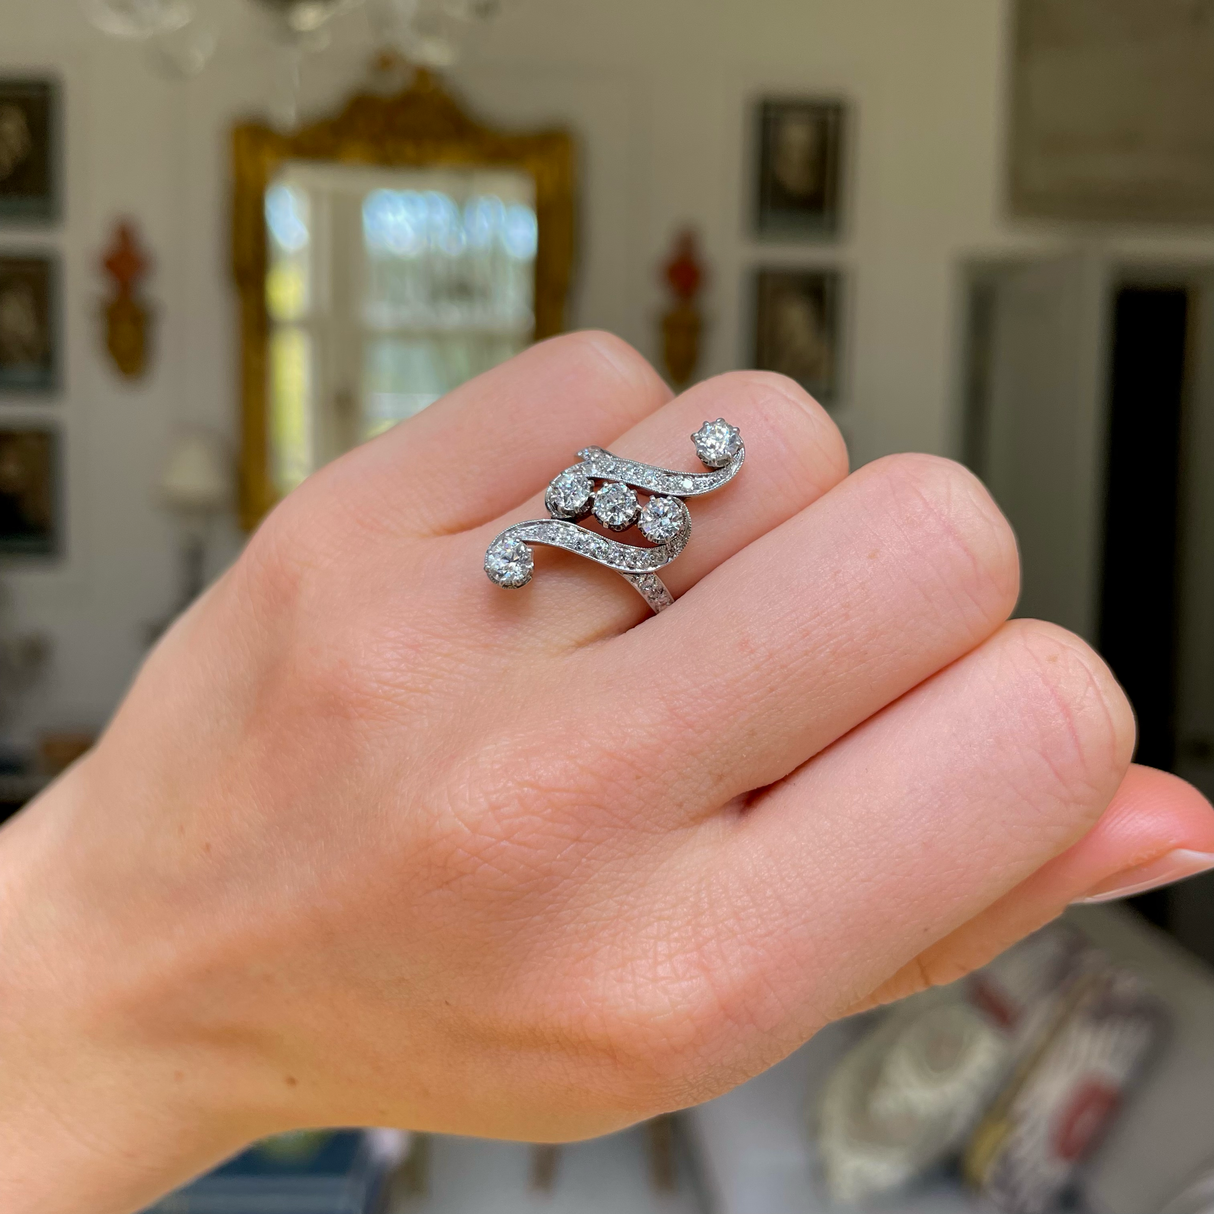 Art Nouveau diamond engagement ring, worn on hand.